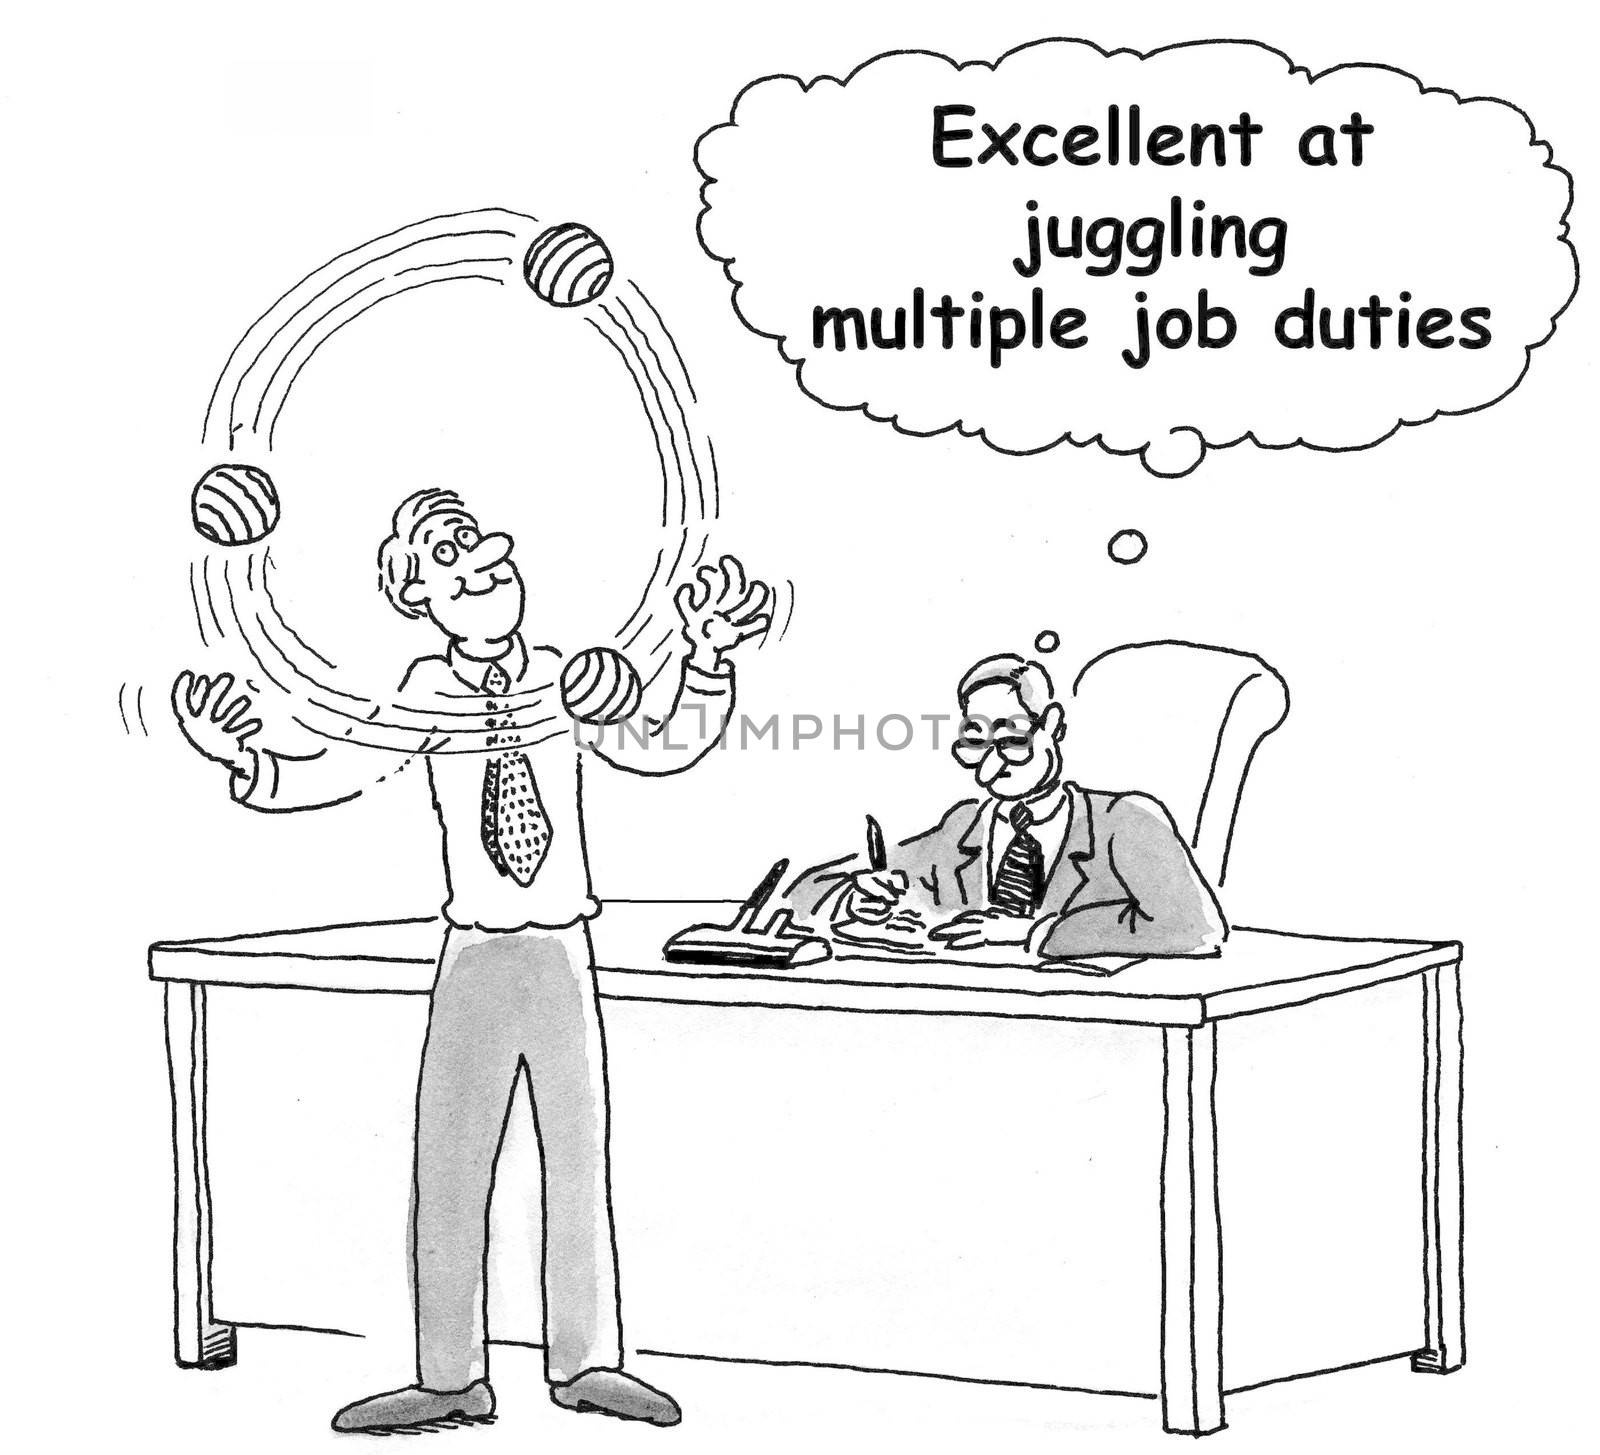 'Excellent at juggling multiple job duties.'